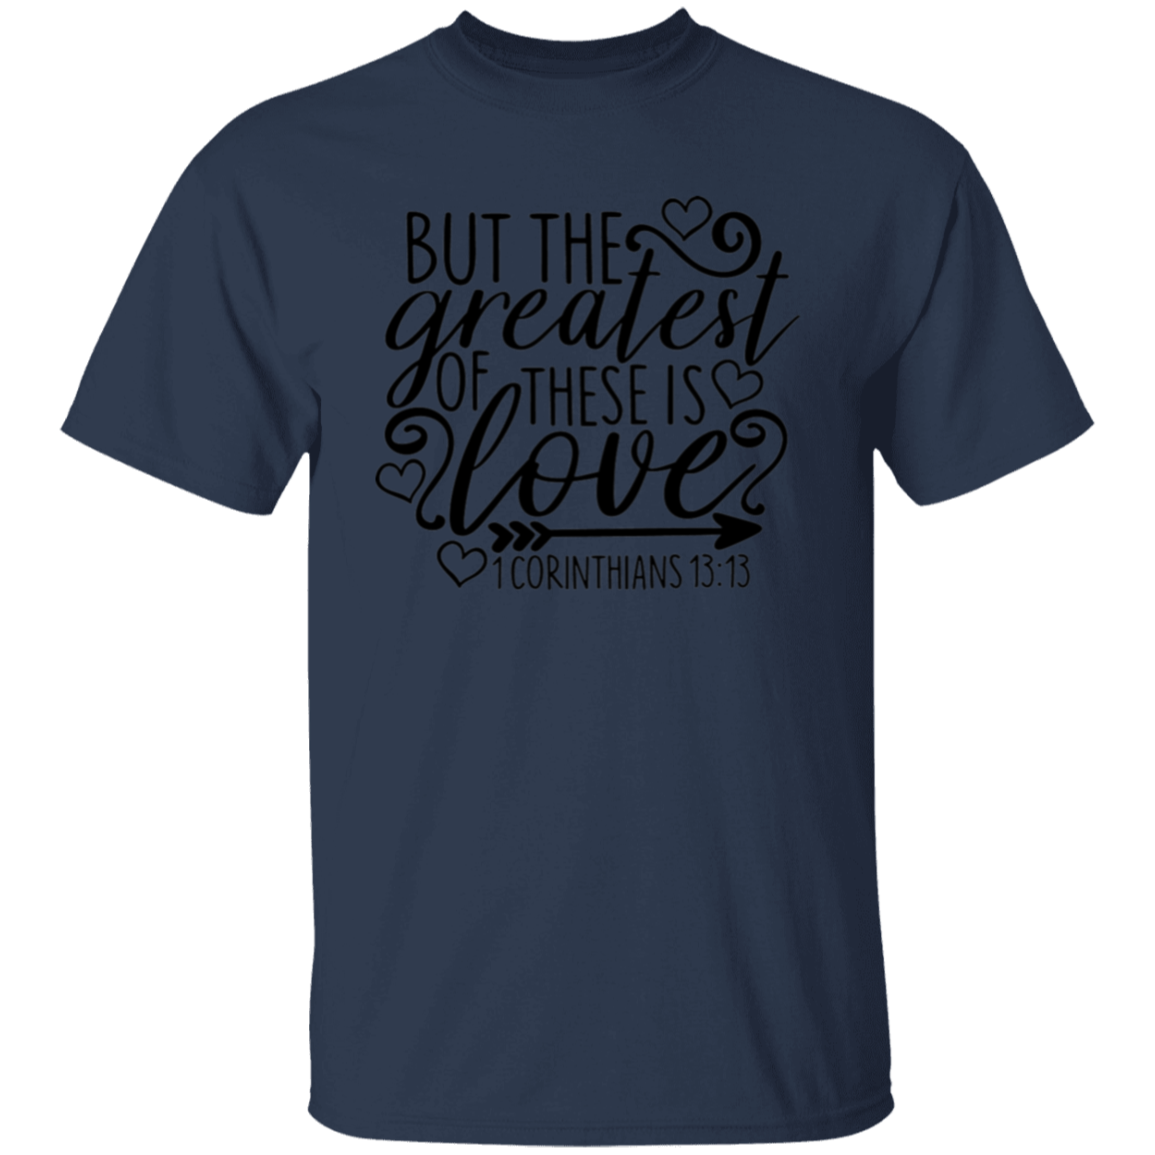 1 Corinthians 13:13 | T-Shirt